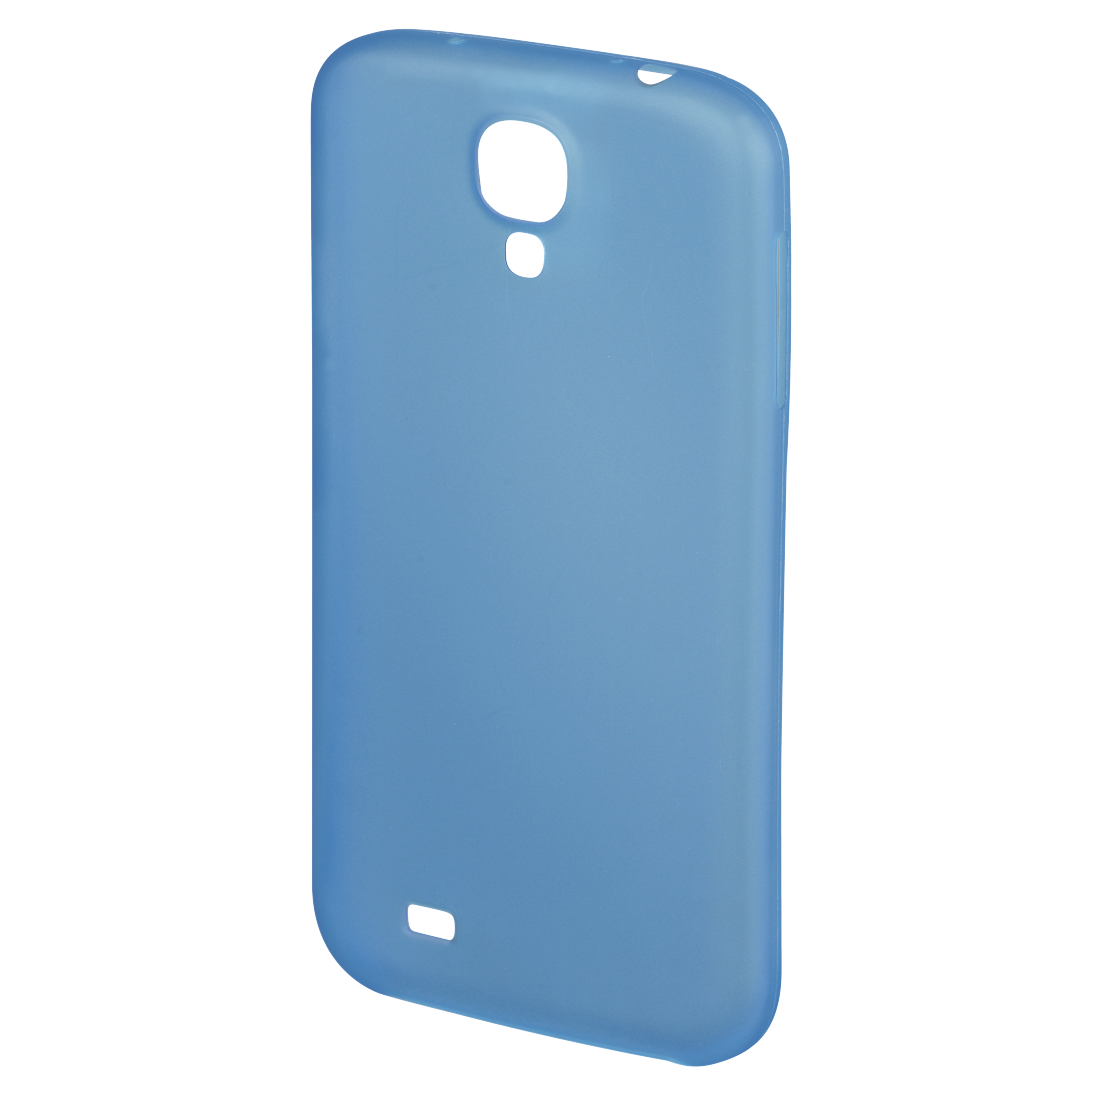 00124617 Hama "Ultra Slim" Mobile Phone Cover for Samsung Galaxy S 4 mini  (LTE), blue | hama.com